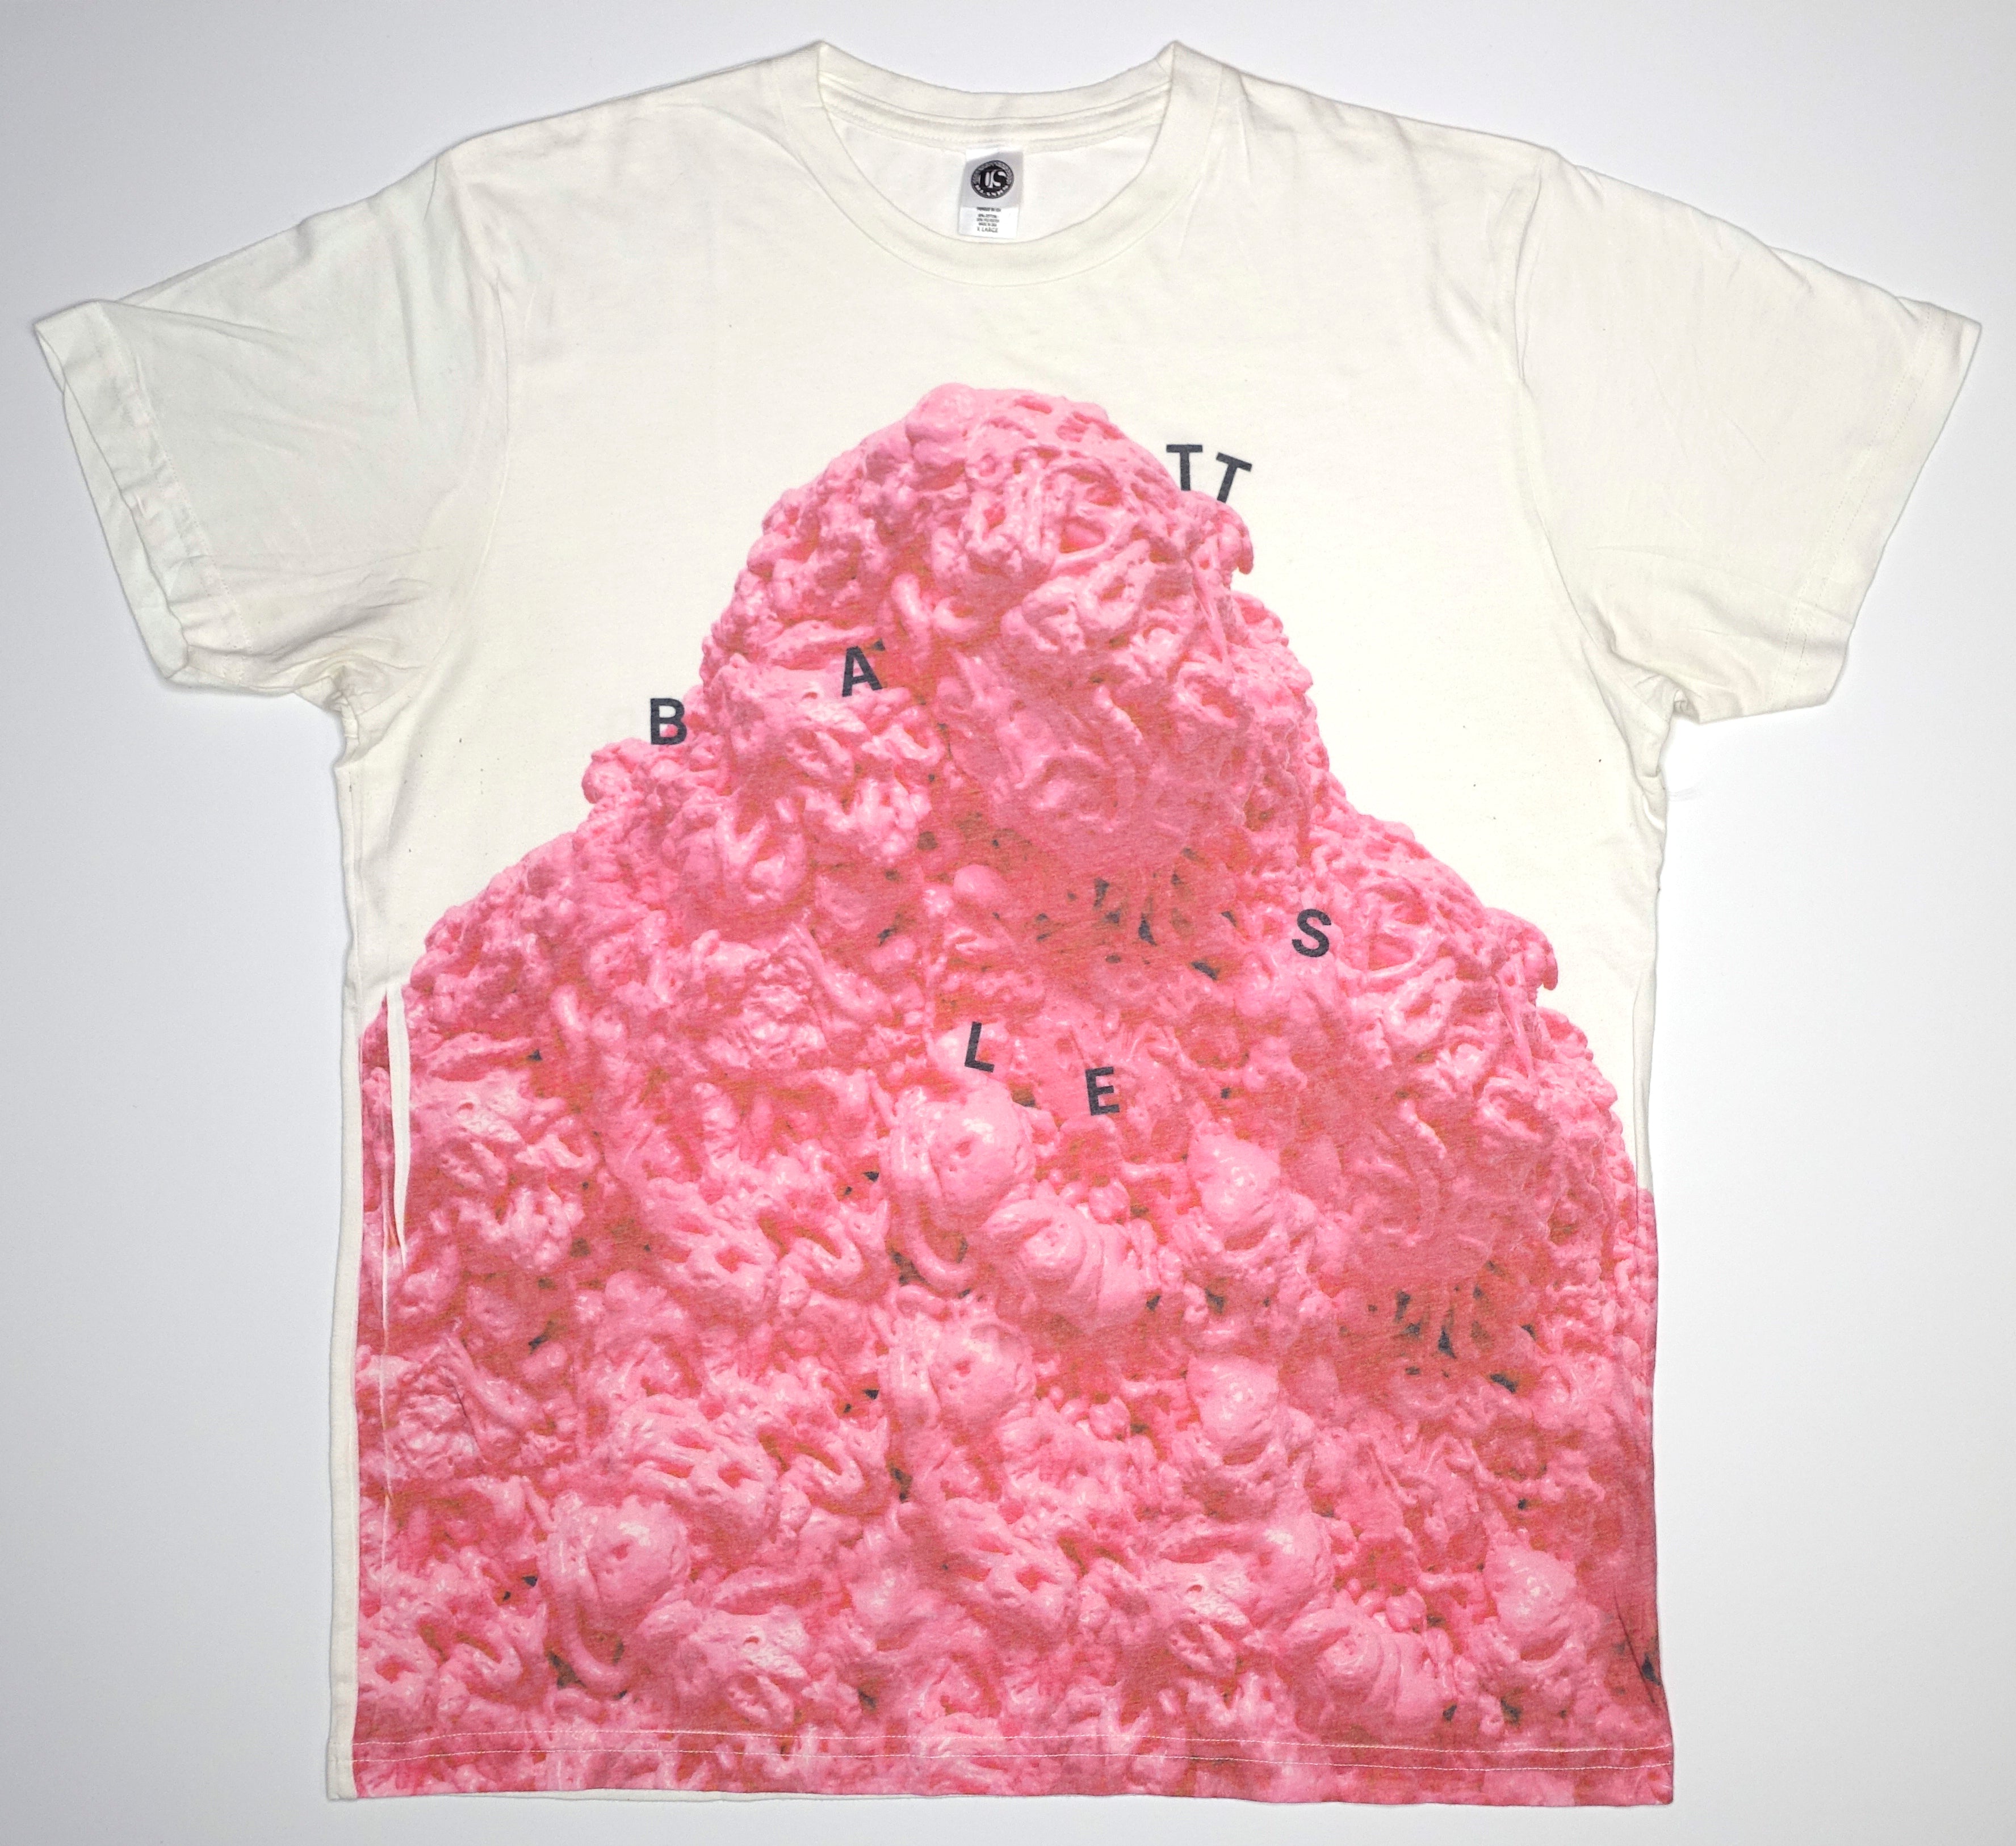 Battles - Gloss Drop / Ice Cream 2011 Tour Shirt Size XL / Large